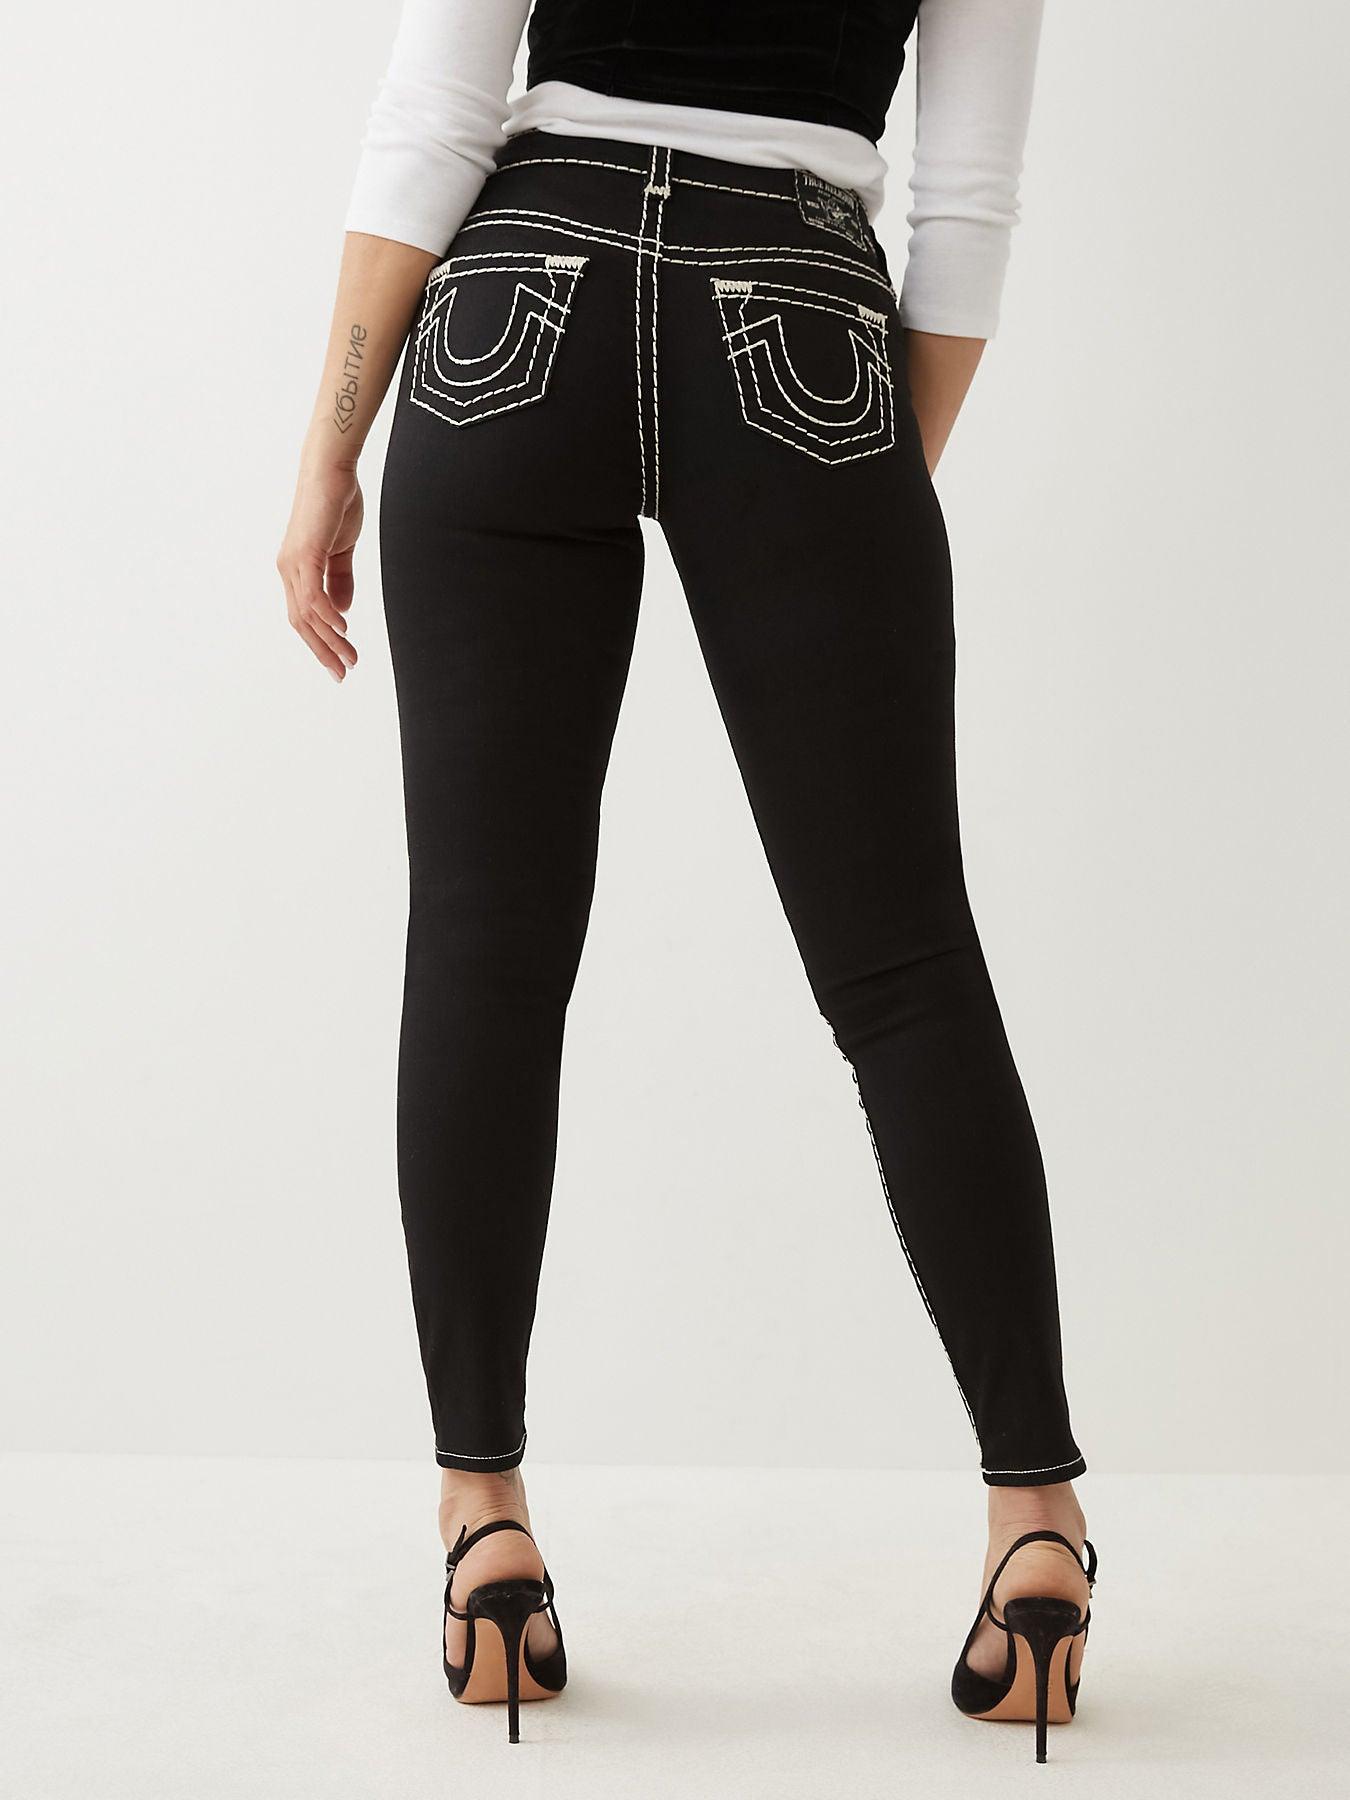 Jennie Super T True Religion Curvy Skinny Jeans 205249 - tiendadicons.com